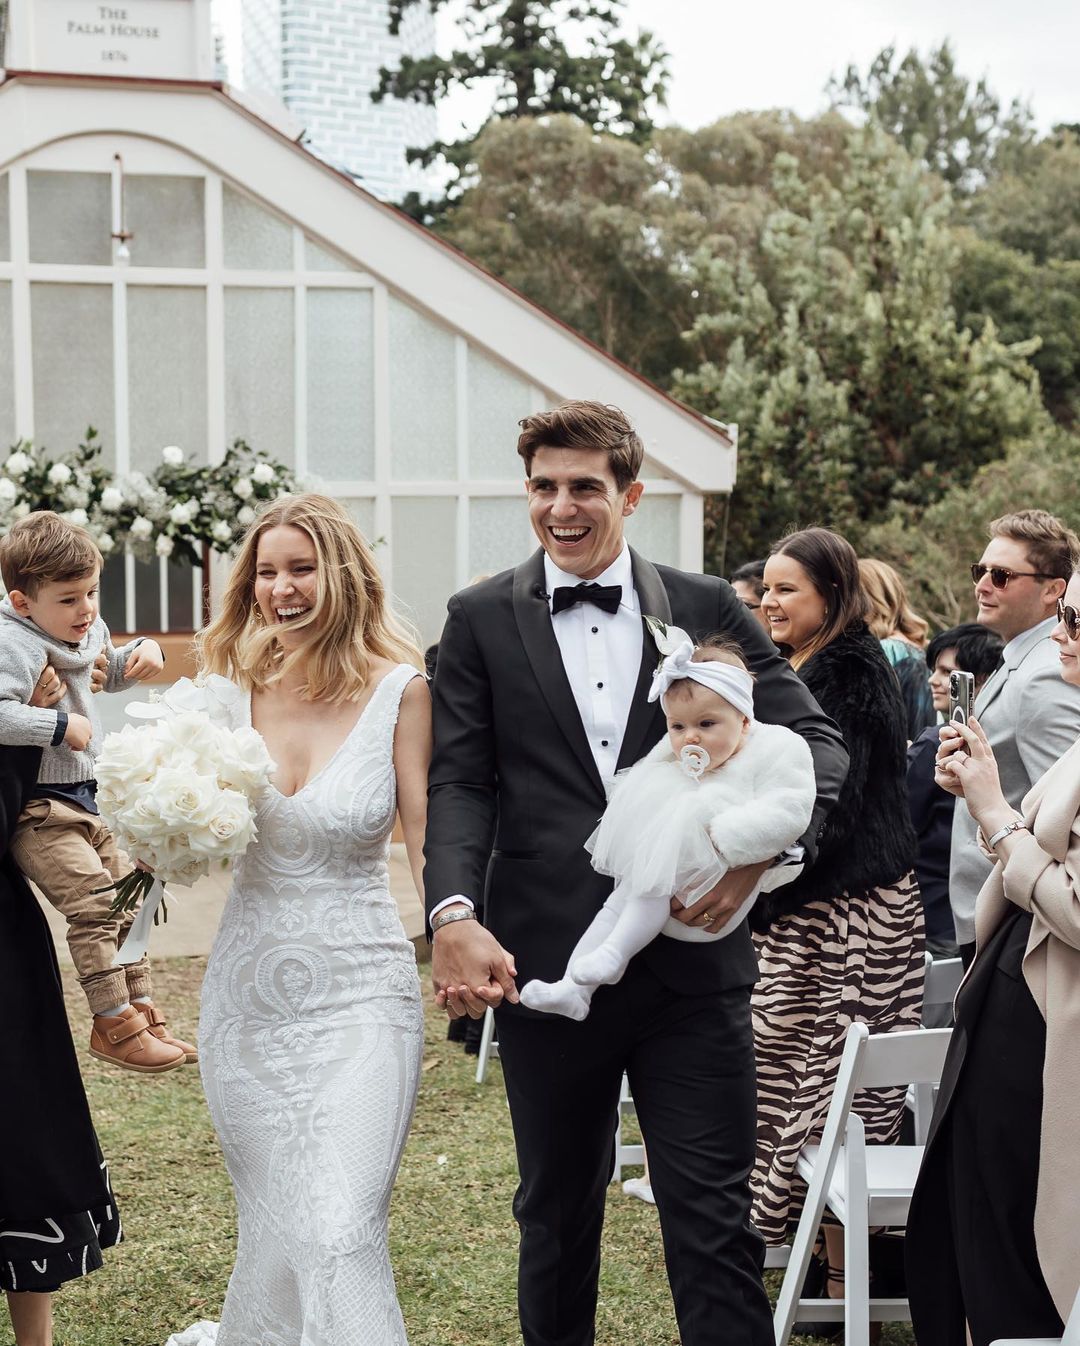 Sean Abbott with his wife, Brier Abbott, and their baby Ella at their wedding